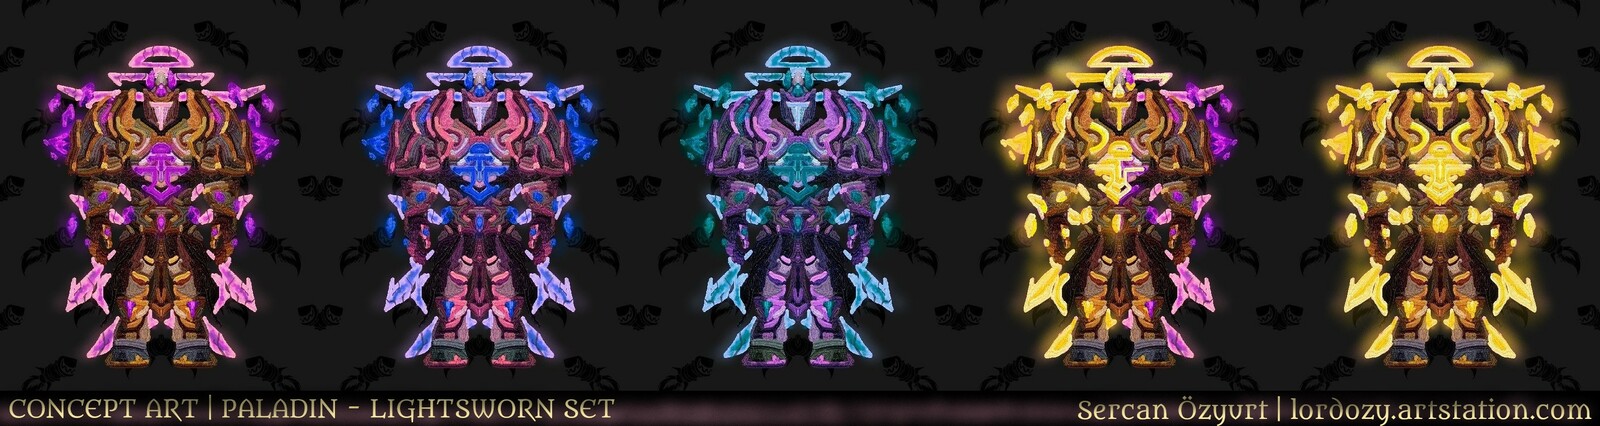 [Fan Art] World of Warcraft - Concept Art Paladin Set